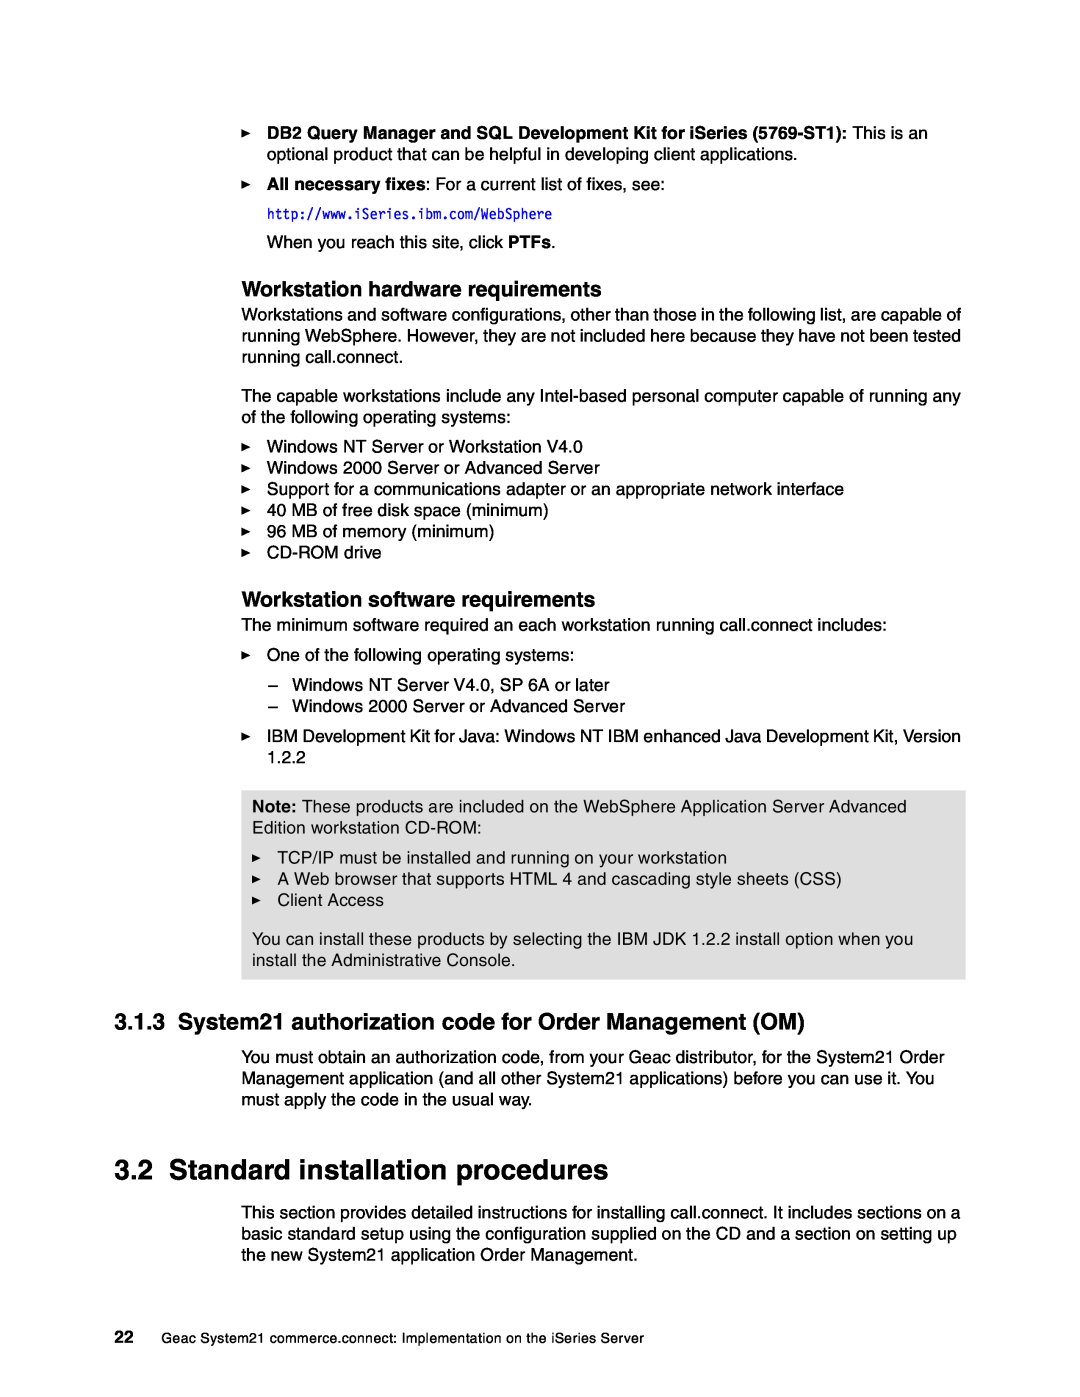 IBM SG24-6526-00 manual Standard installation procedures, System21 authorization code for Order Management OM 